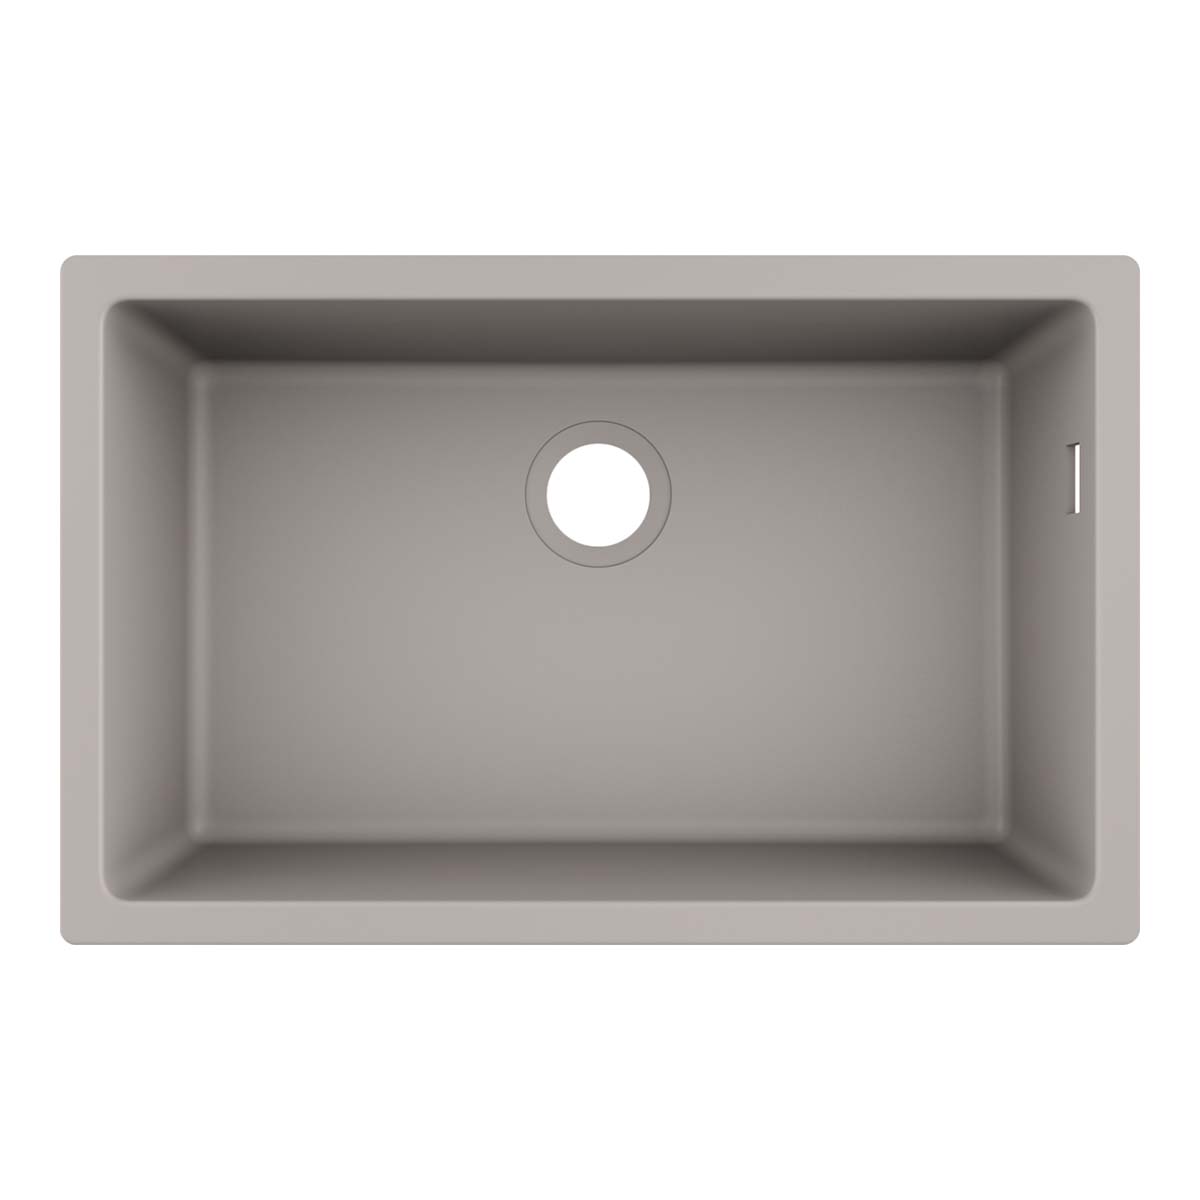 Hansgrohe S51 U510 U660 Single Bowl Undermounted Kitchen Sink SilicaTec concrete grey 658x398mm